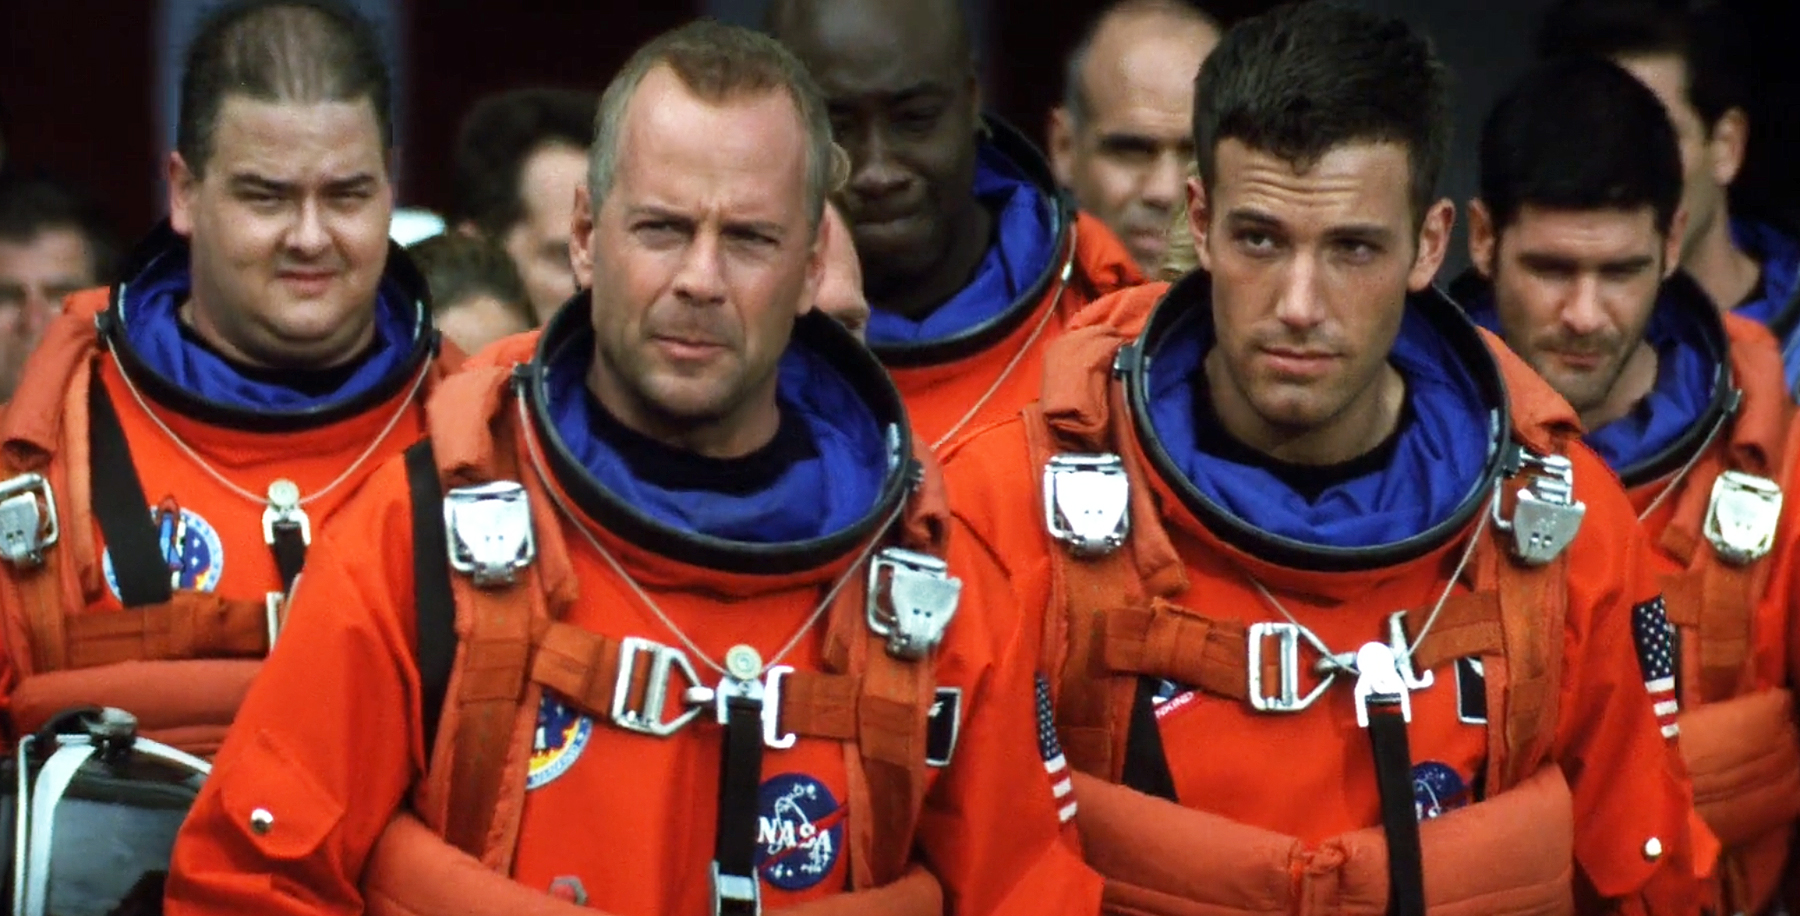 armageddon filminden bir grup astronot